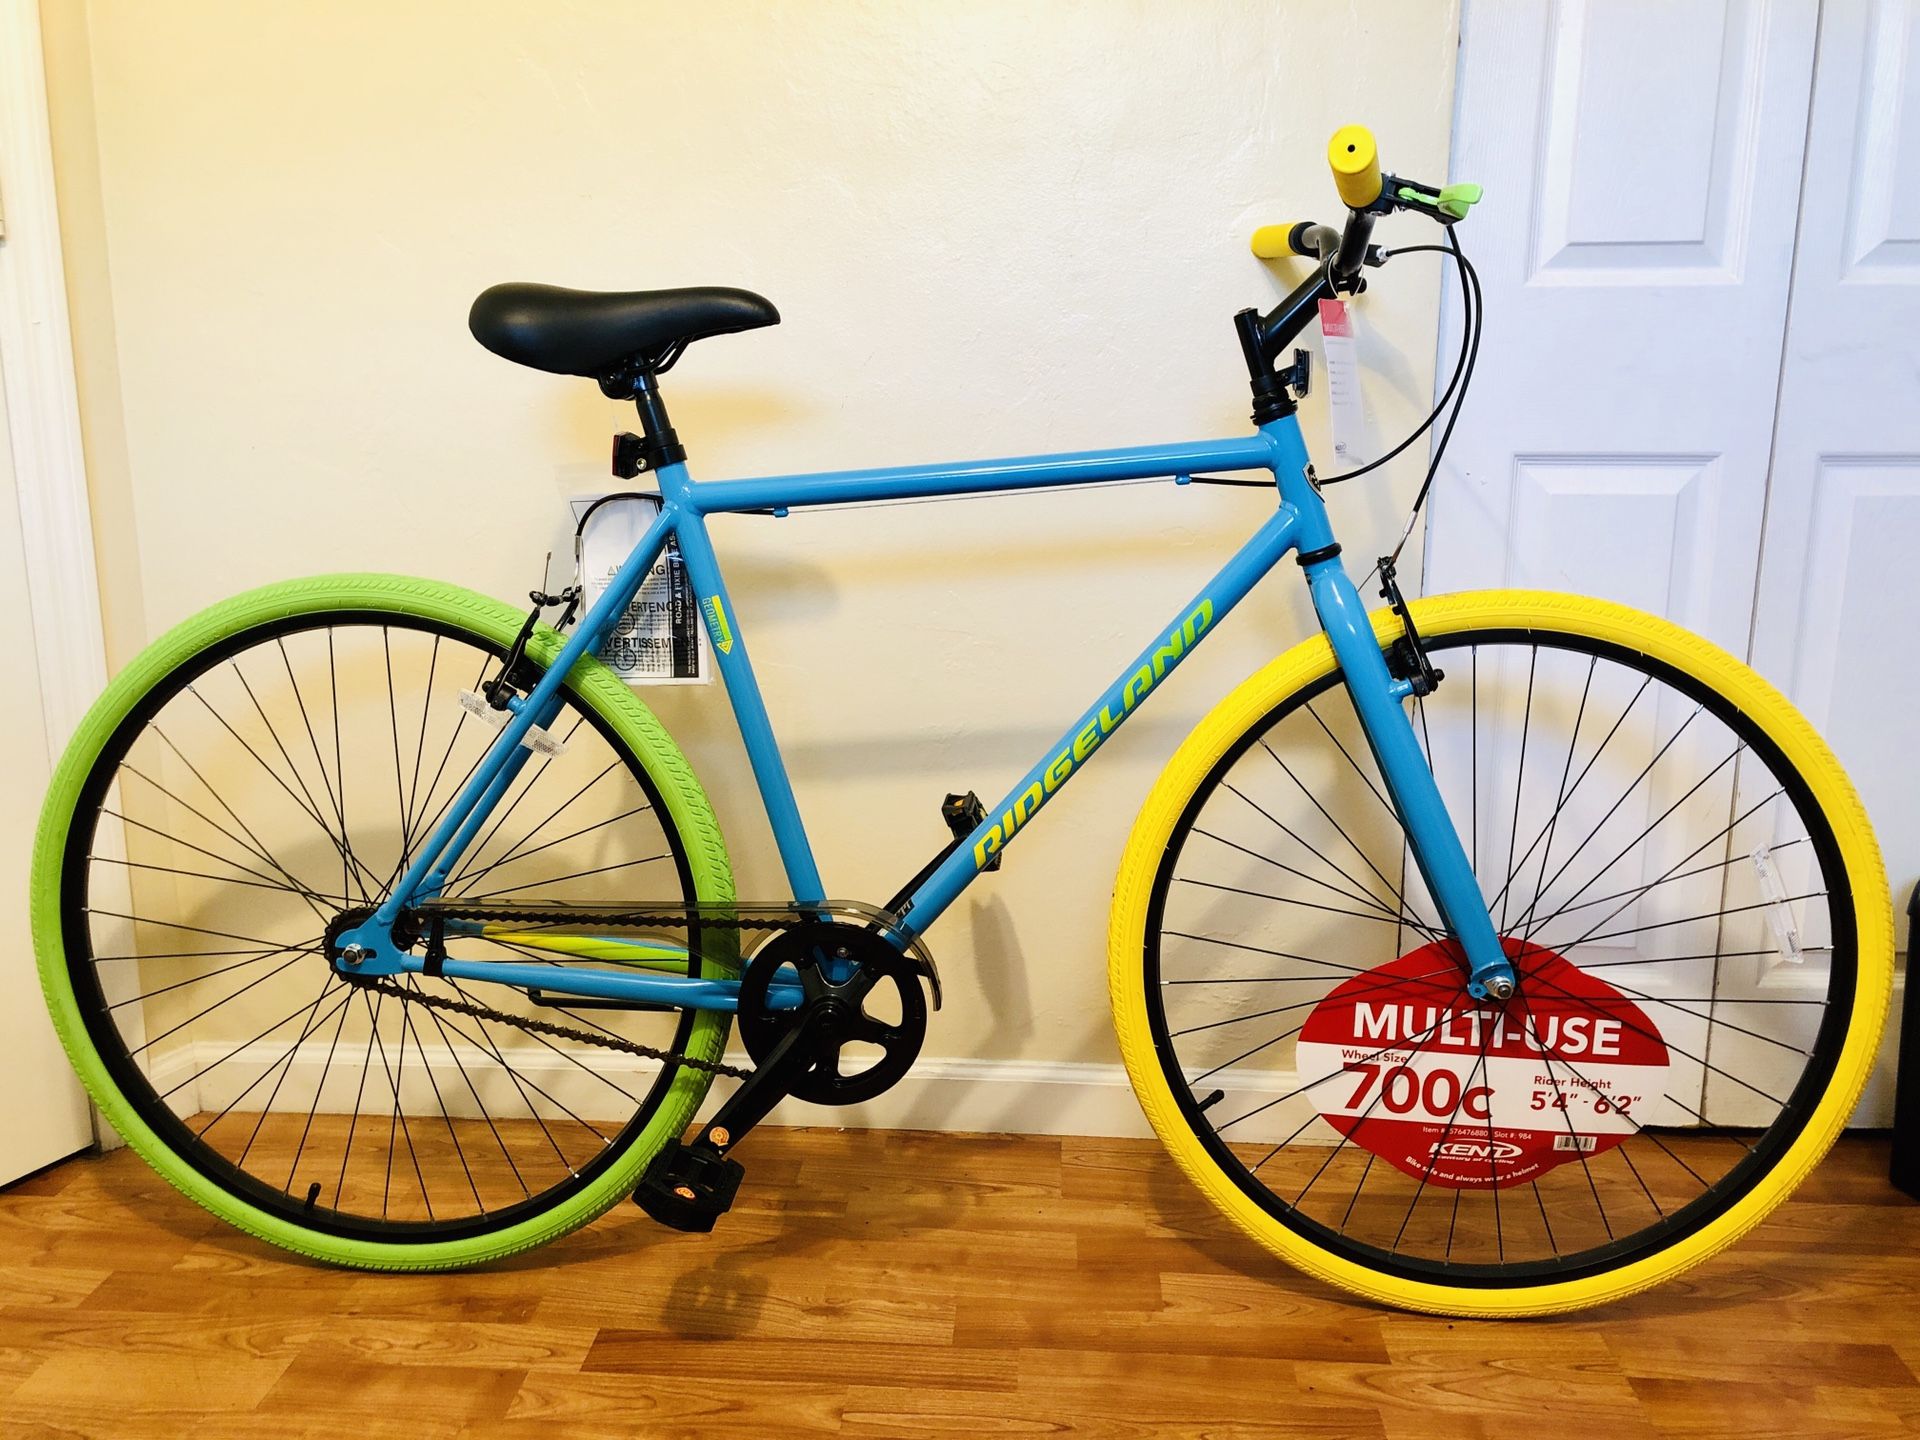 Bike - Men’s Bike Women’s Bicycle 700c Colorful 🇧🇷 Bike